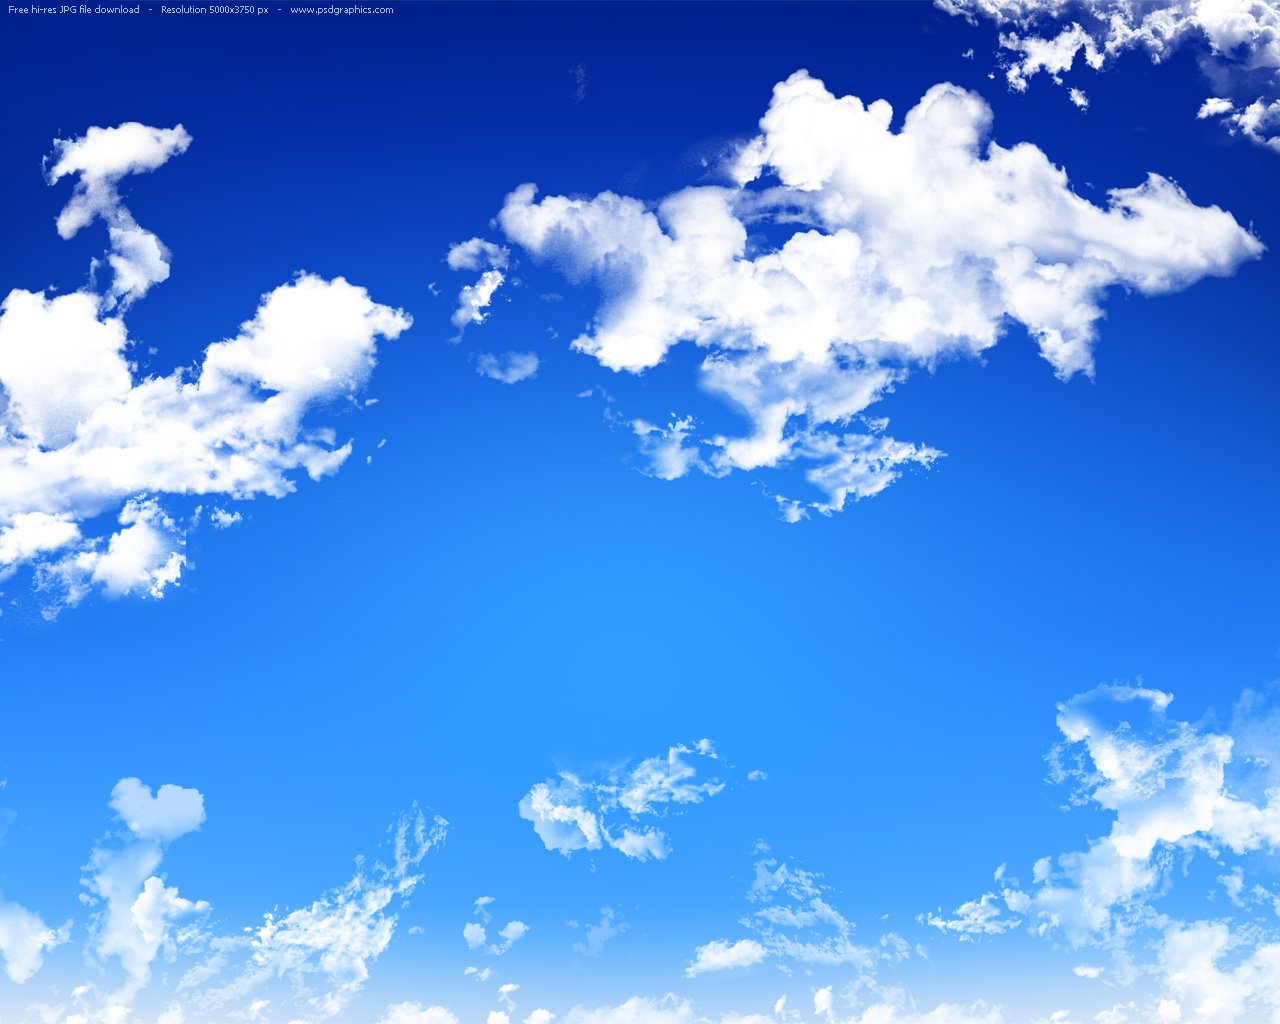 https://www.psdgraphics.com/file/blue-sky-background.jpg